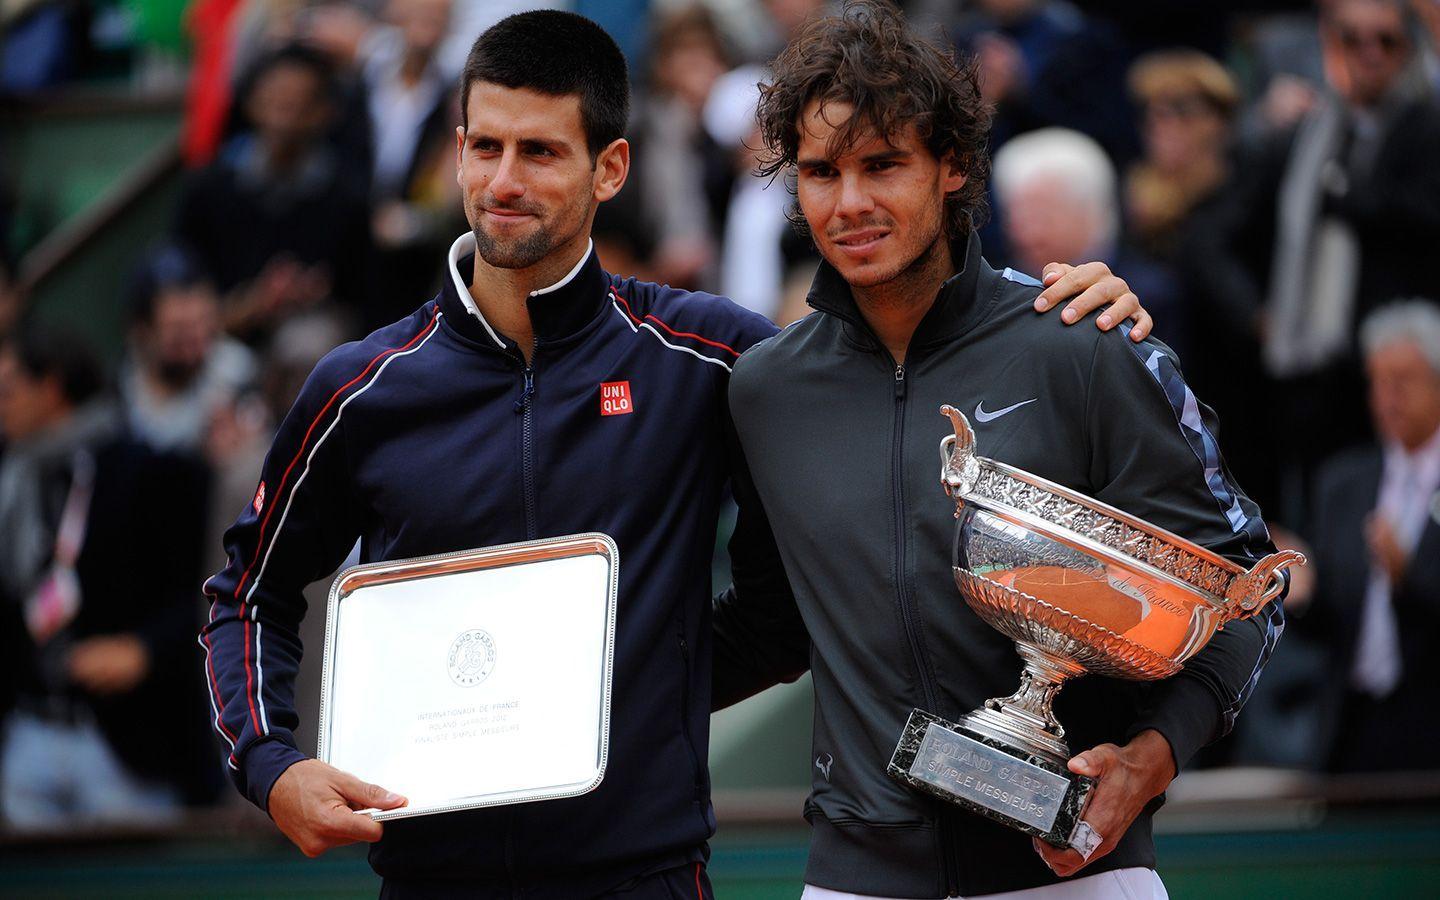 Rafael Nadal and Novak Djokovic pose for the photographers after